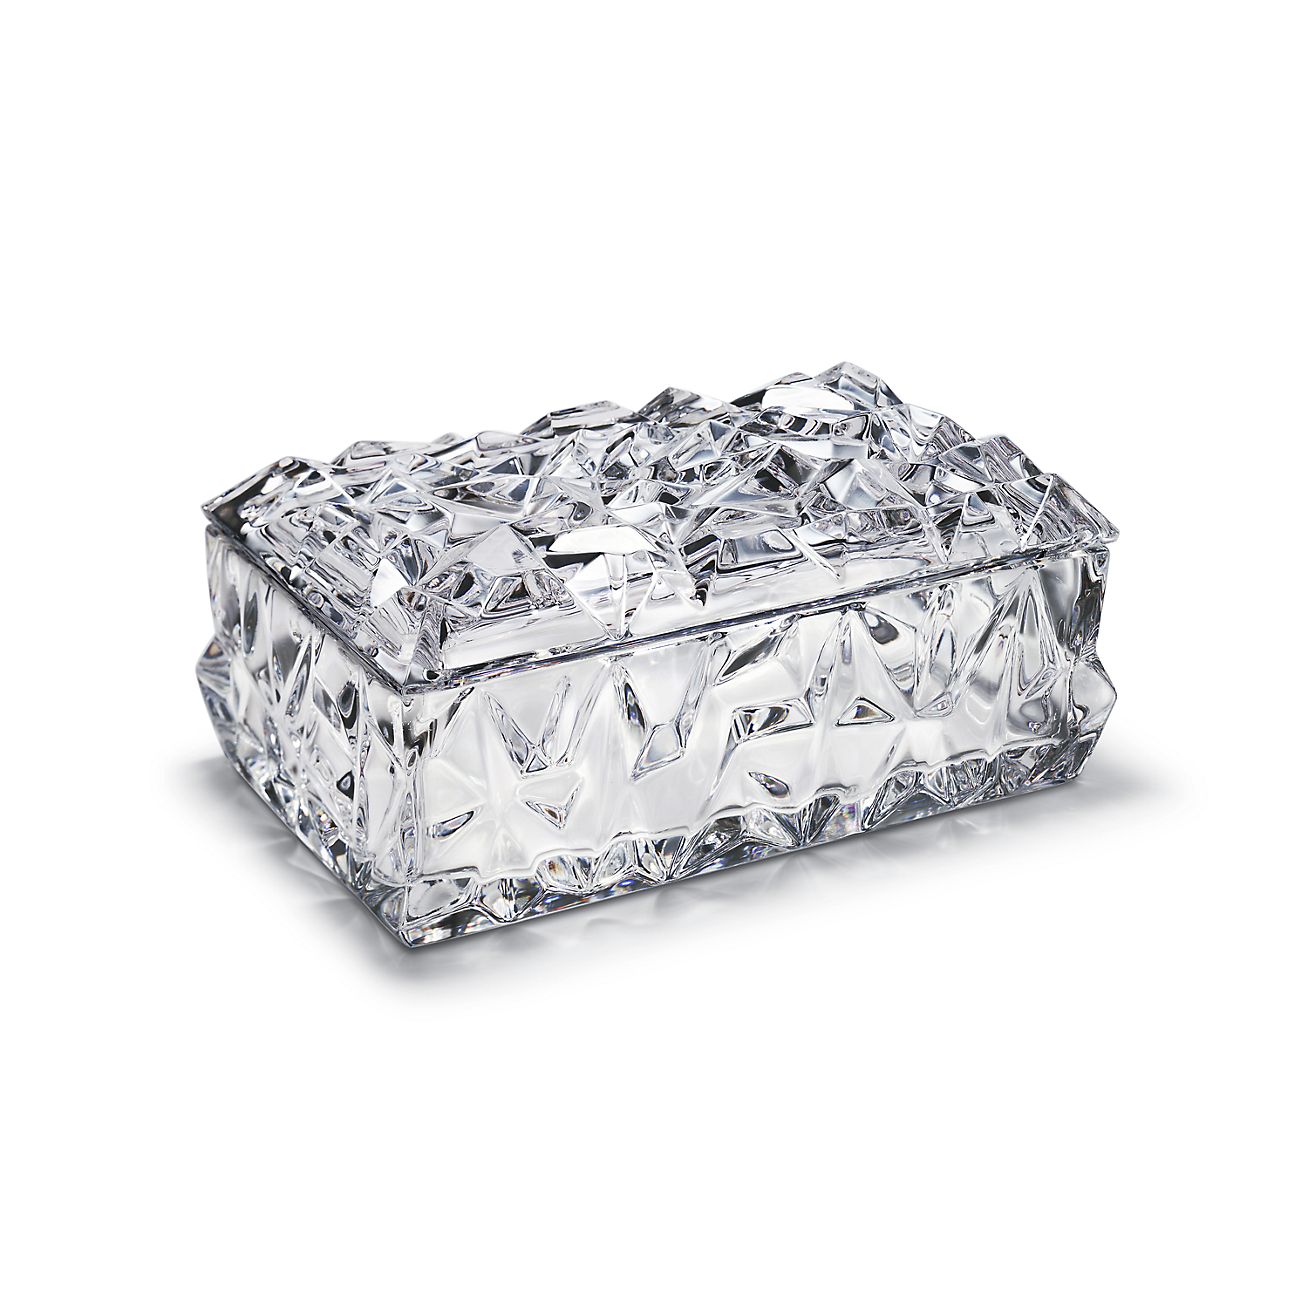 Rock-cut rectangular box in crystal 